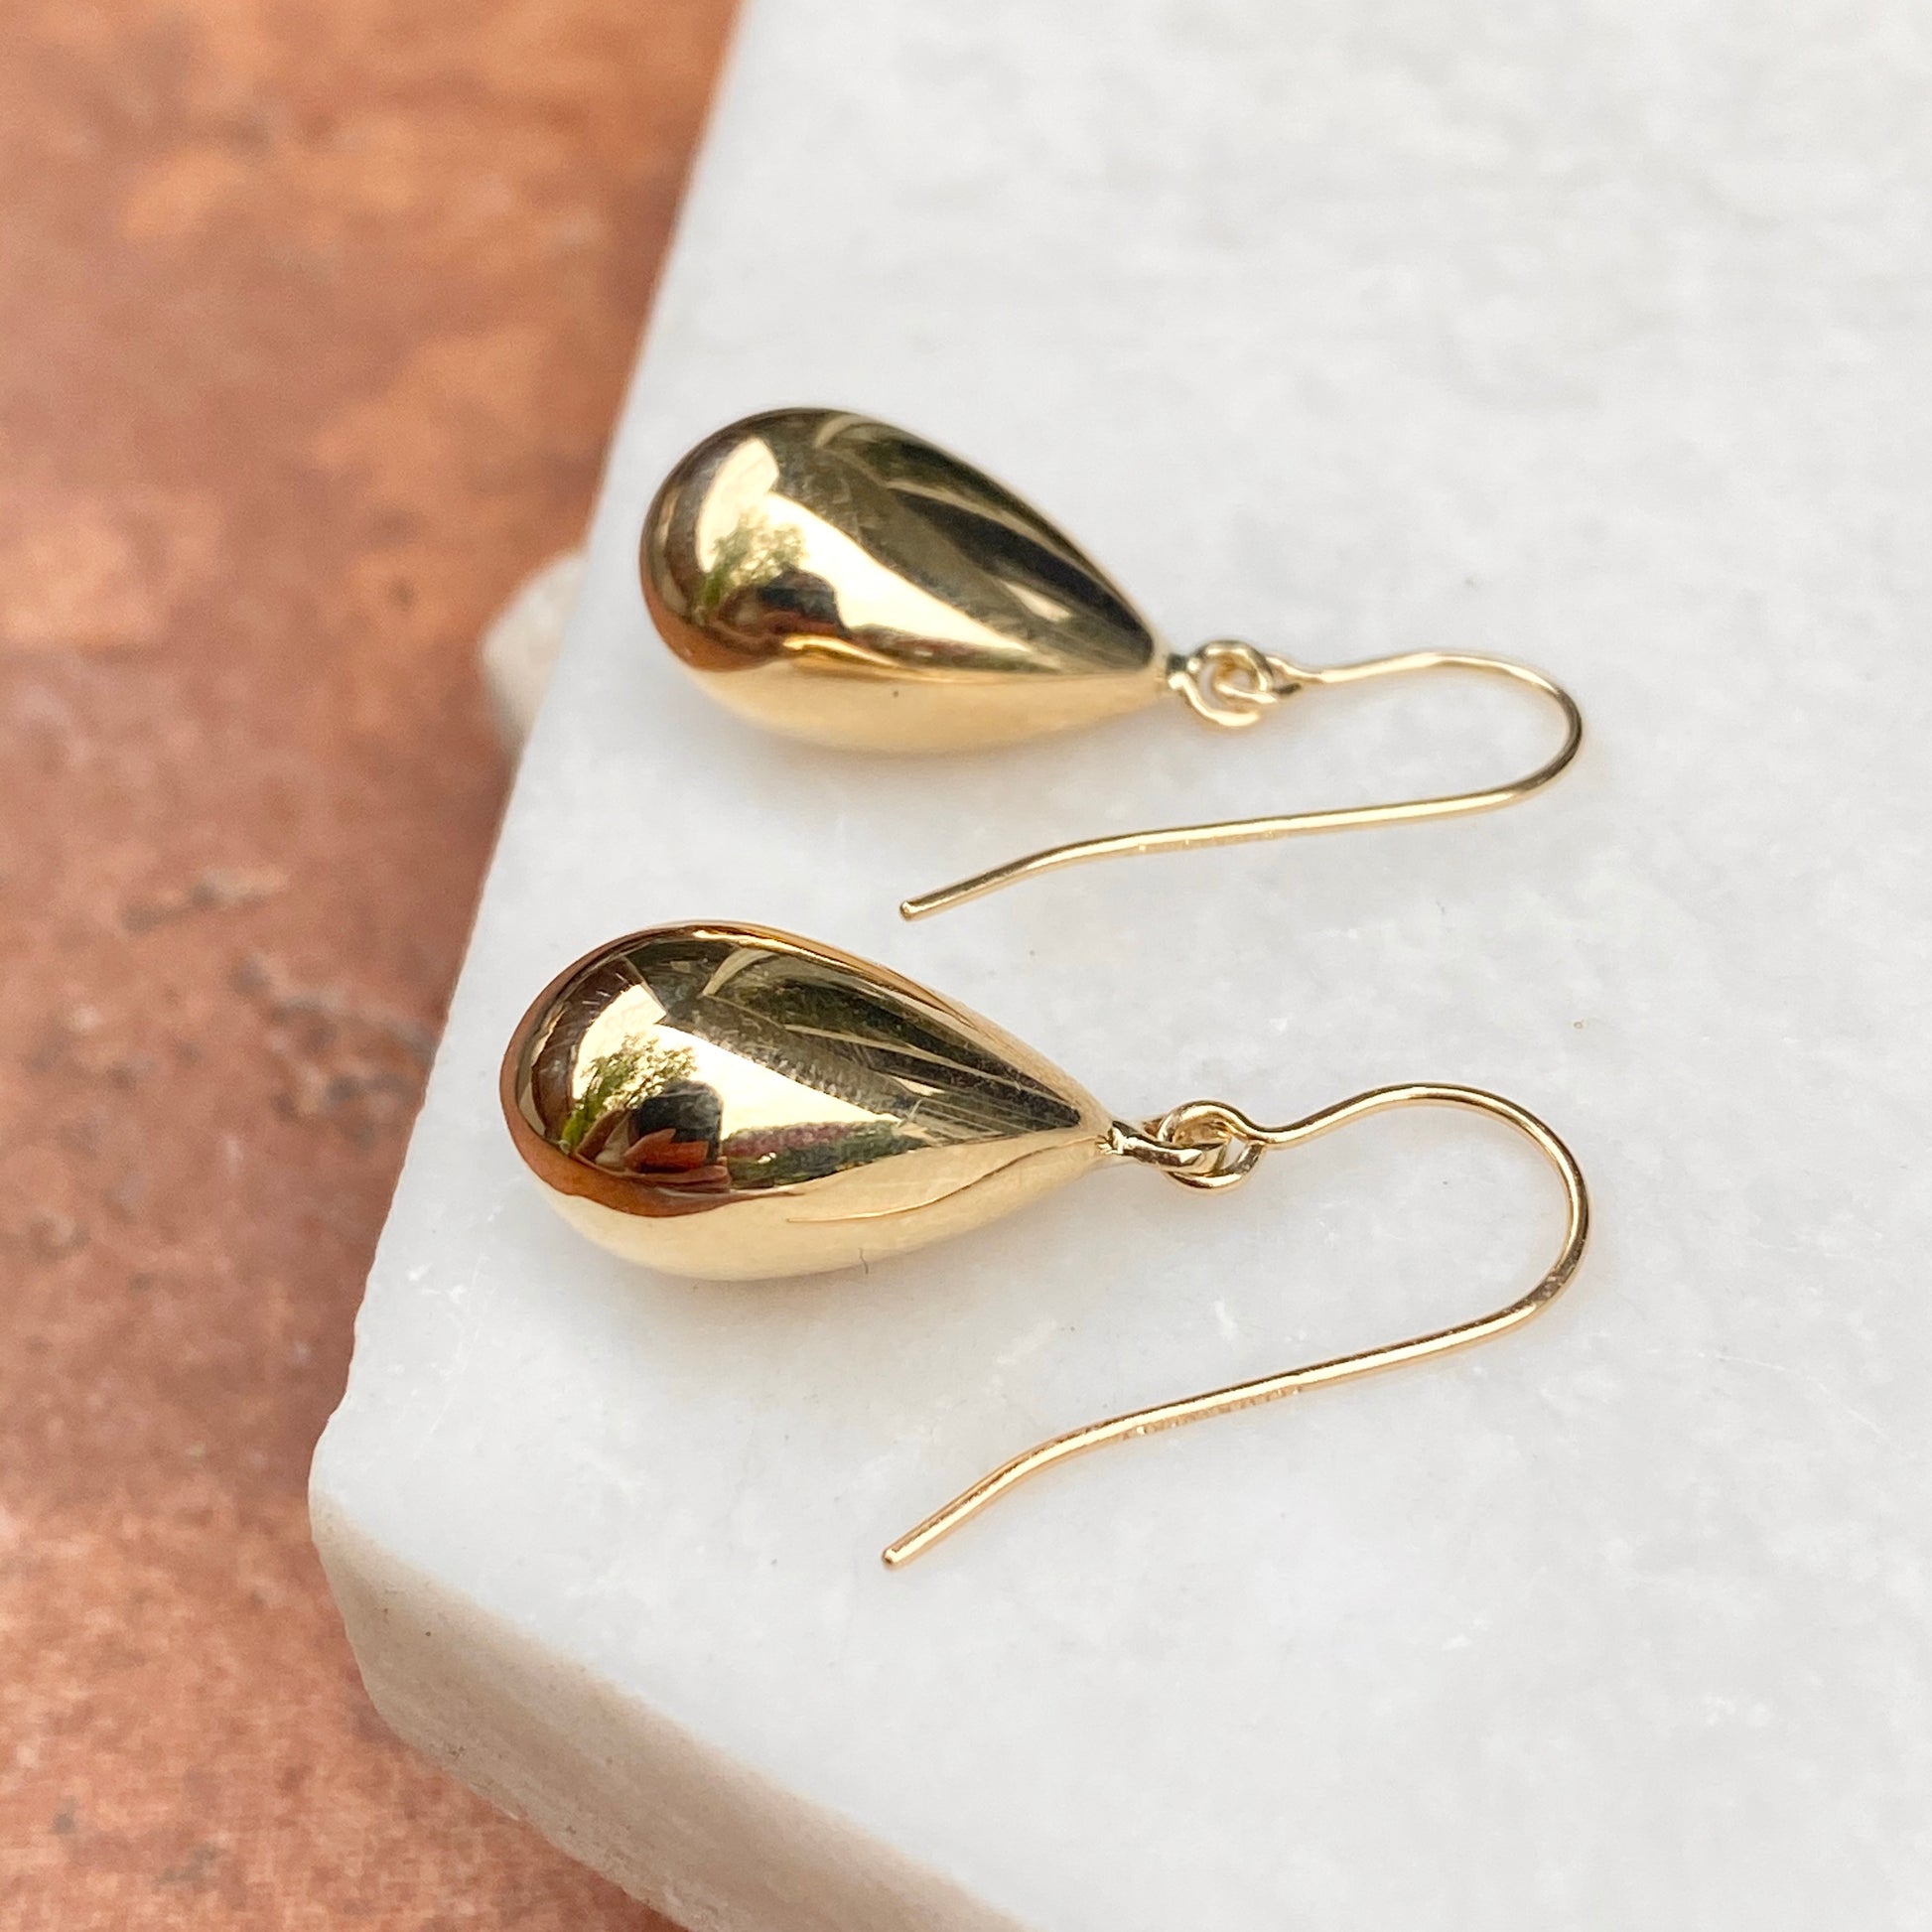 14KT Yellow Gold Polished 3D Teardrop Ear Wire Dangle Earrings, 14KT Yellow Gold Polished 3D Teardrop Ear Wire Dangle Earrings - Legacy Saint Jewelry